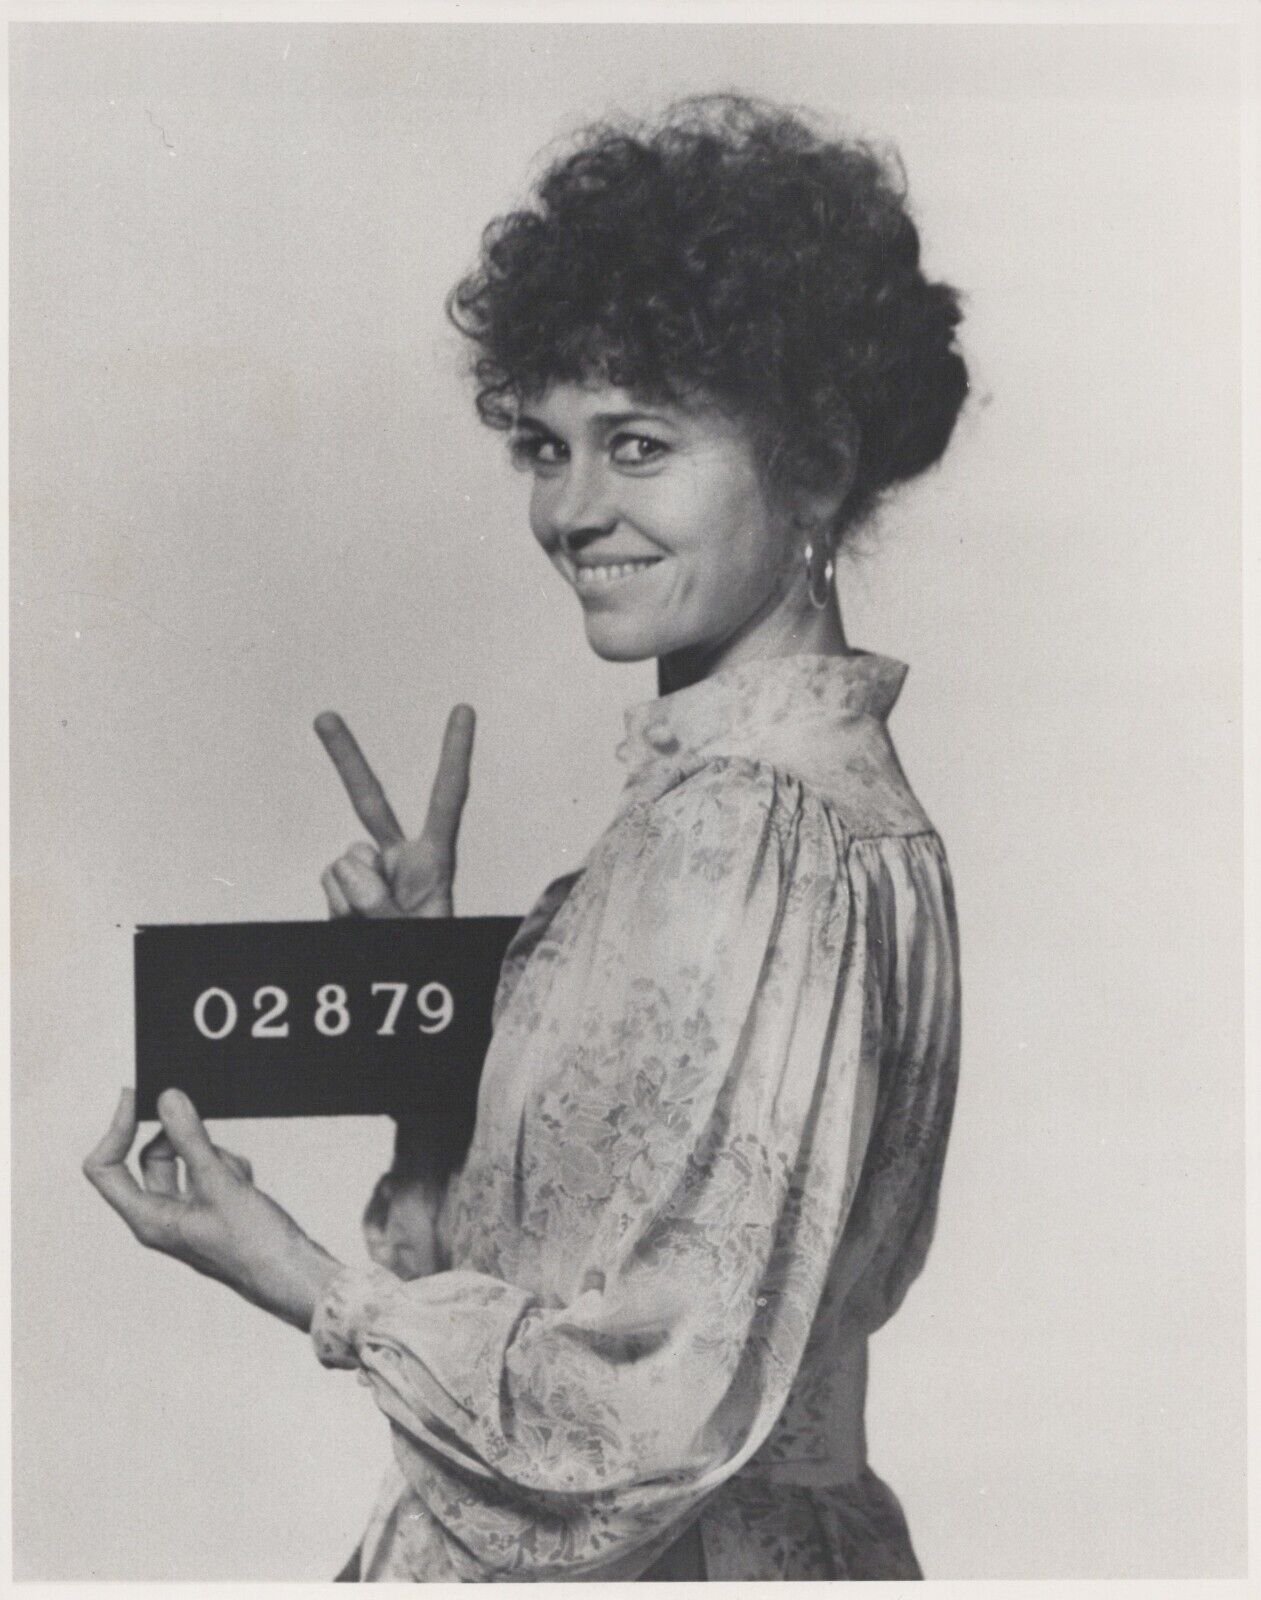 HOLLYWOOD BEAUTY JANE FONDA STYLISH POSE STUNNING PORTRAIT 1960s Photo C44